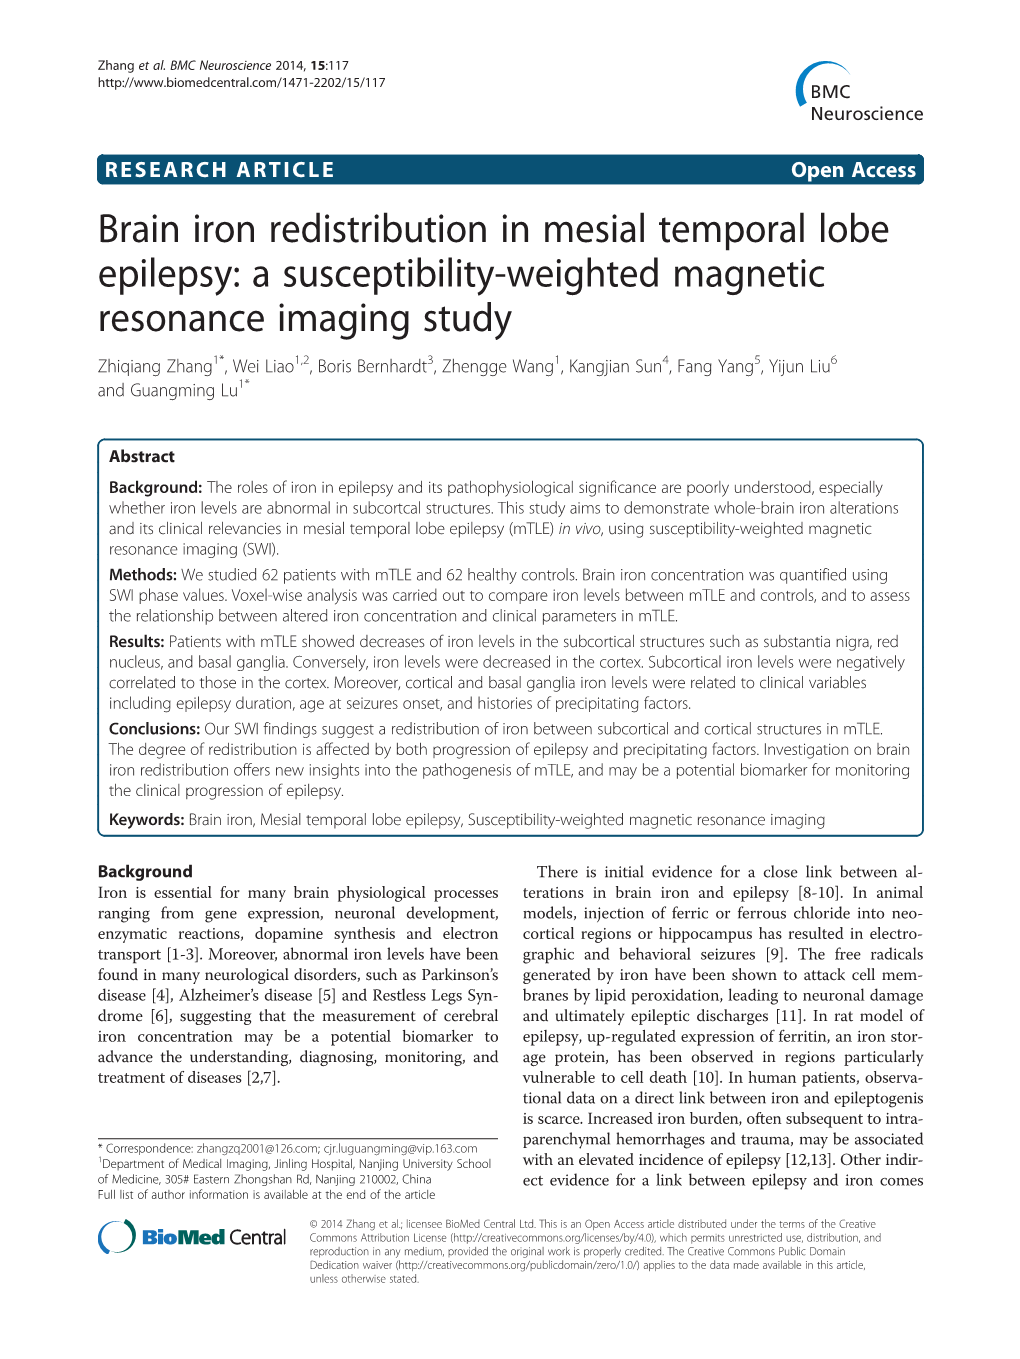 Brain Iron Redistribution in Mesial Temporal Lobe